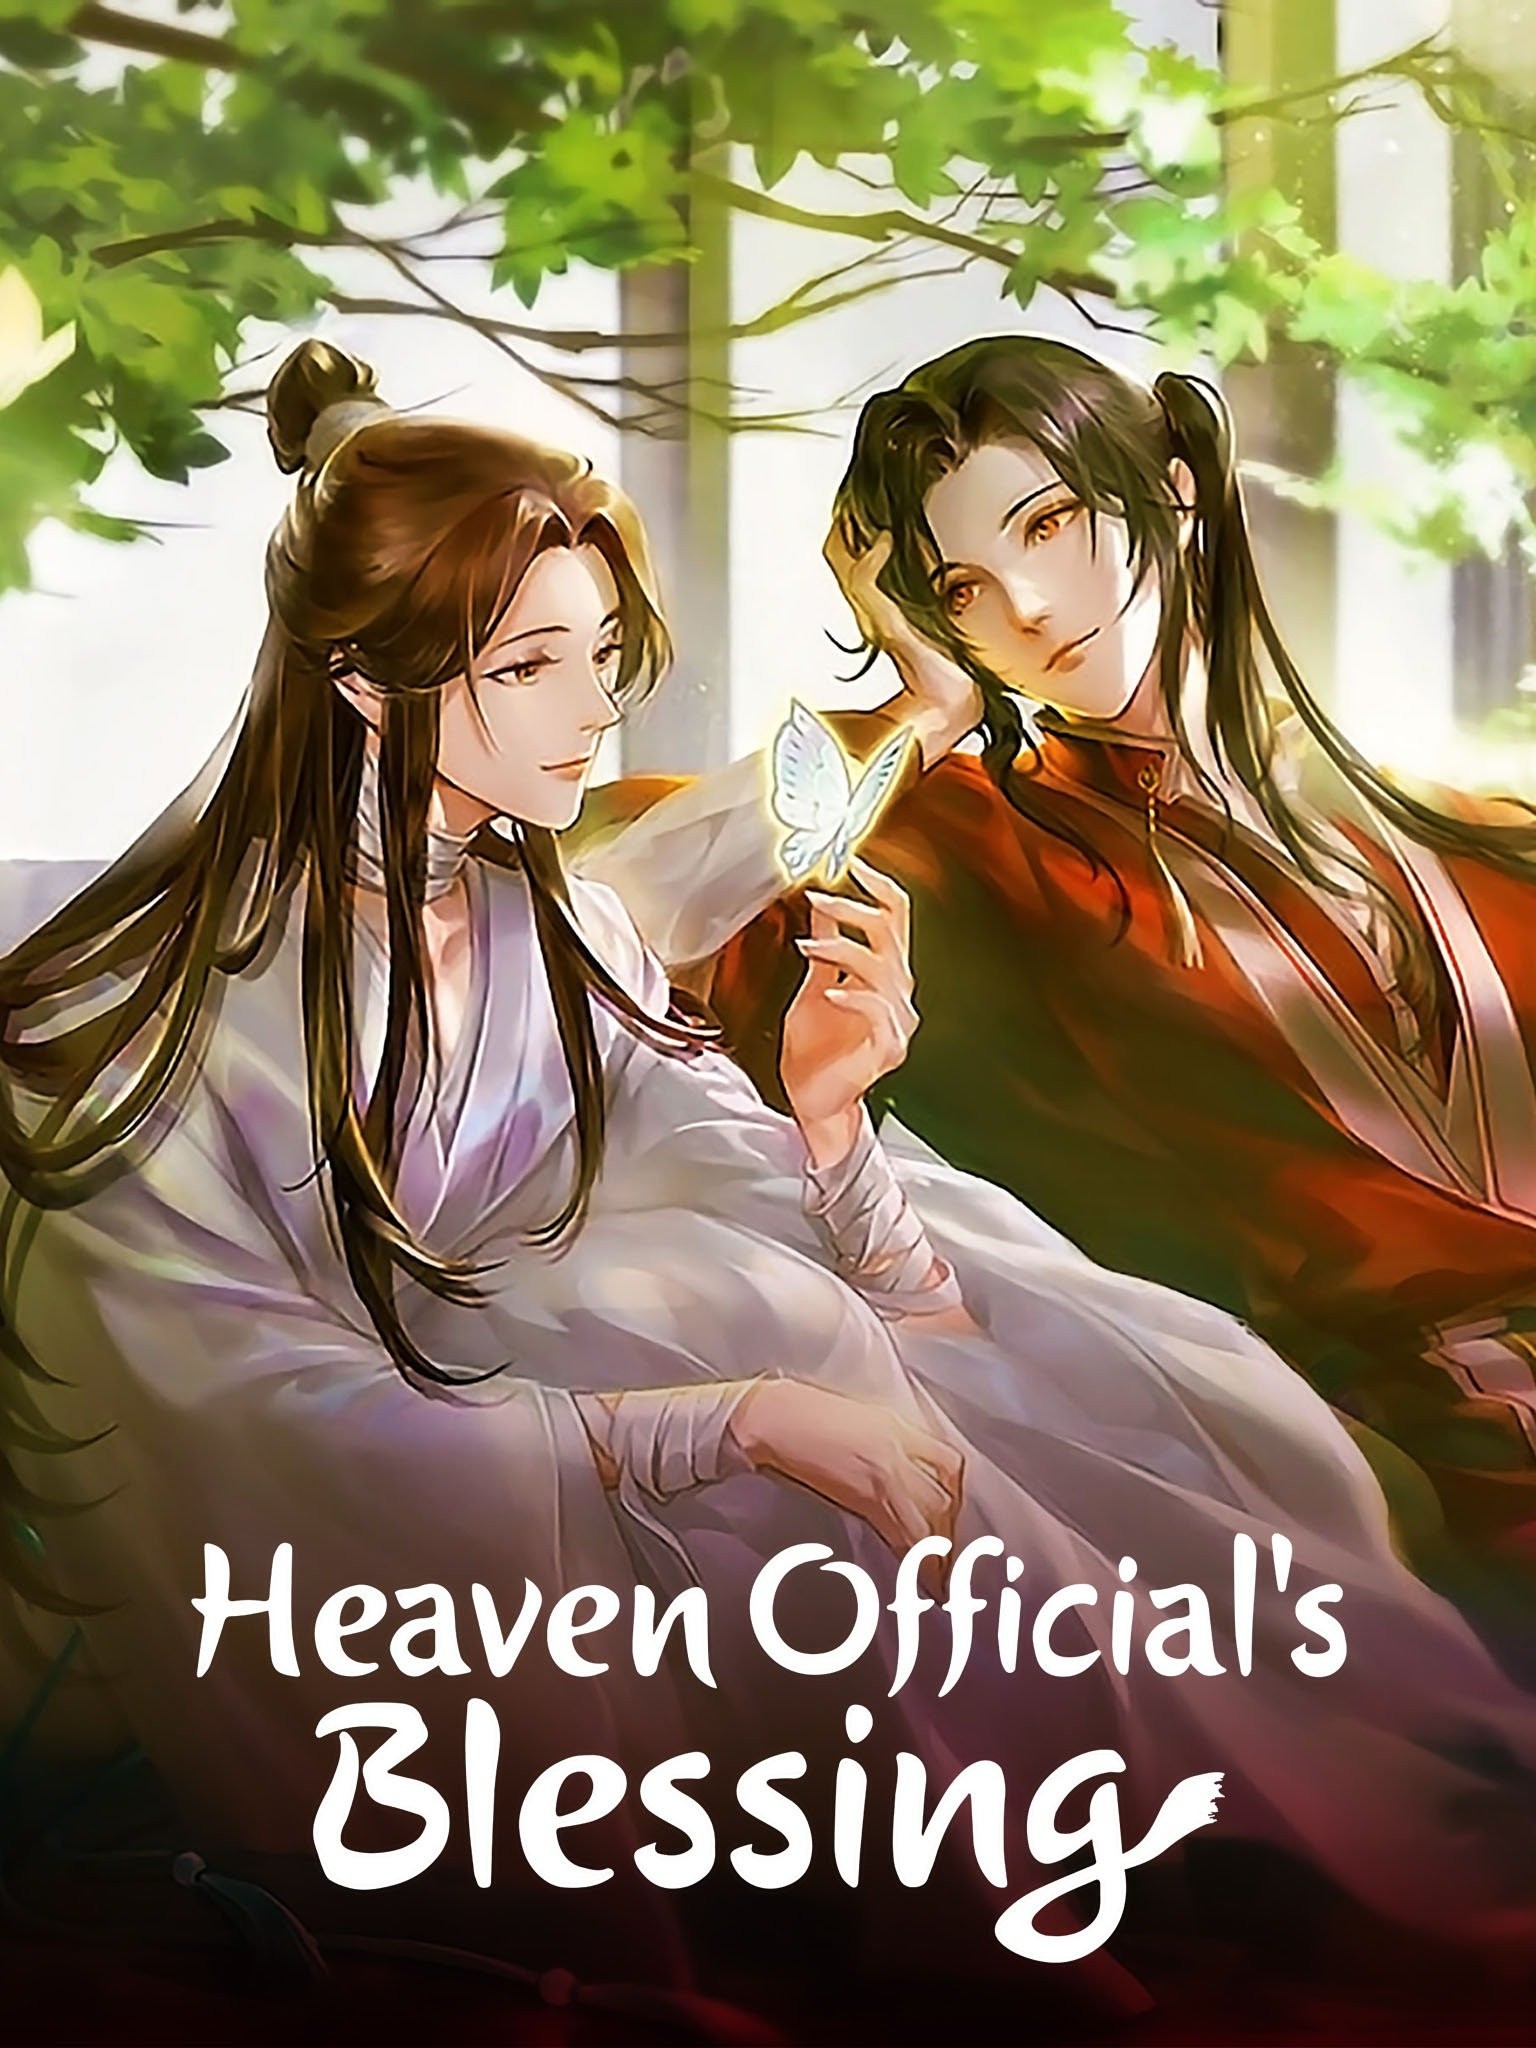 Heaven Official's Blessing (TV Series 2020– ) - News - IMDb